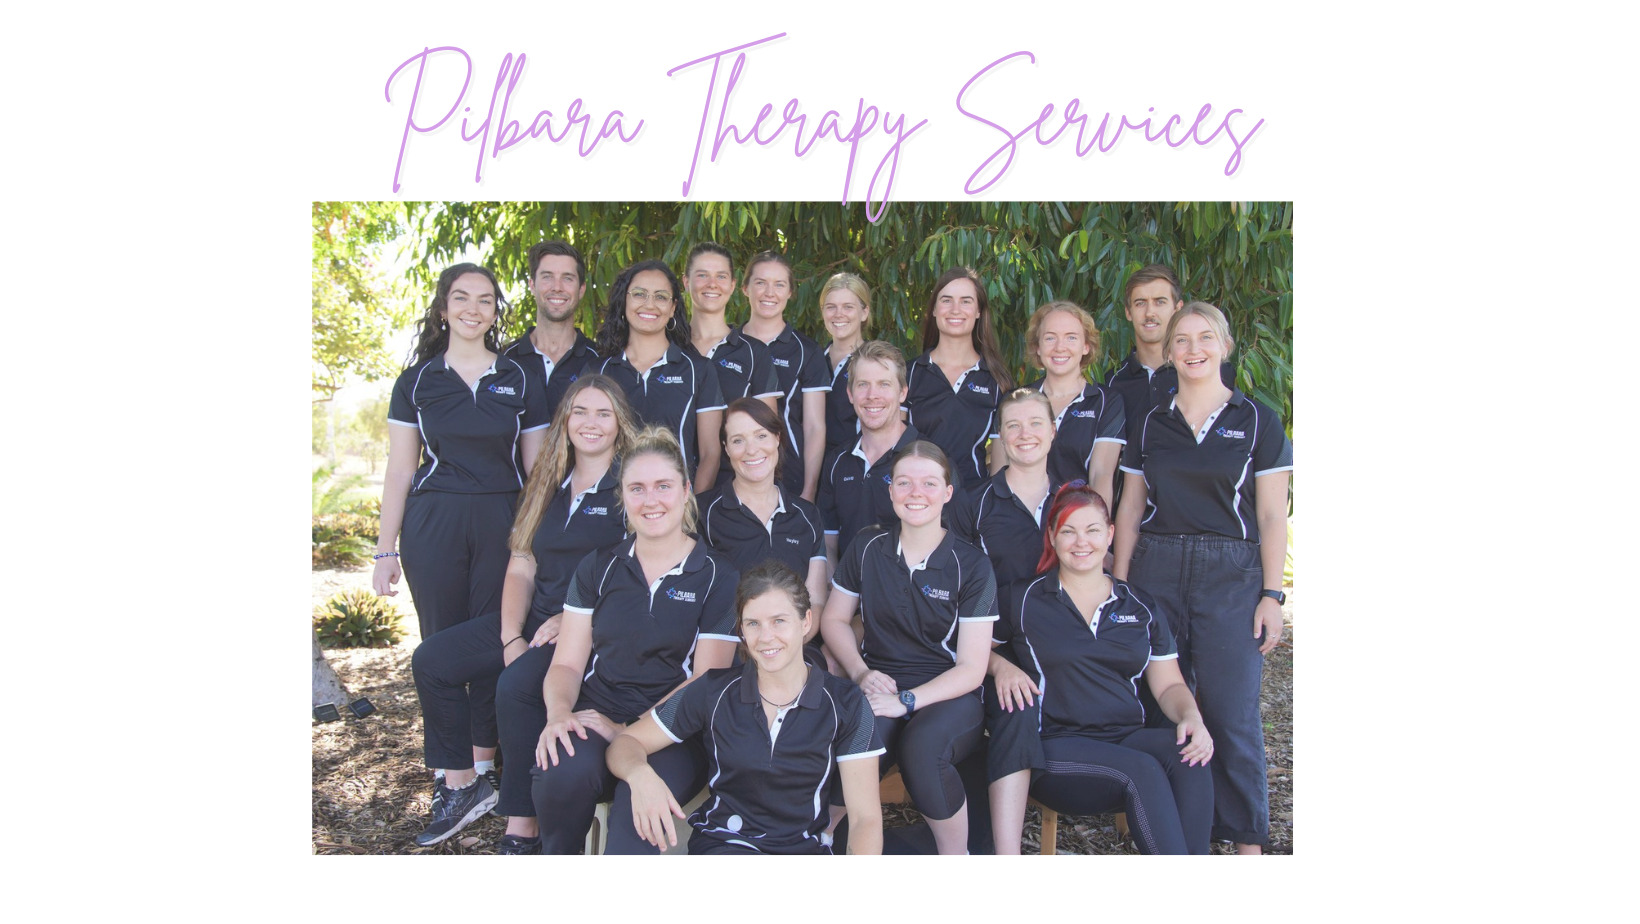 Pilbara Therapy Services